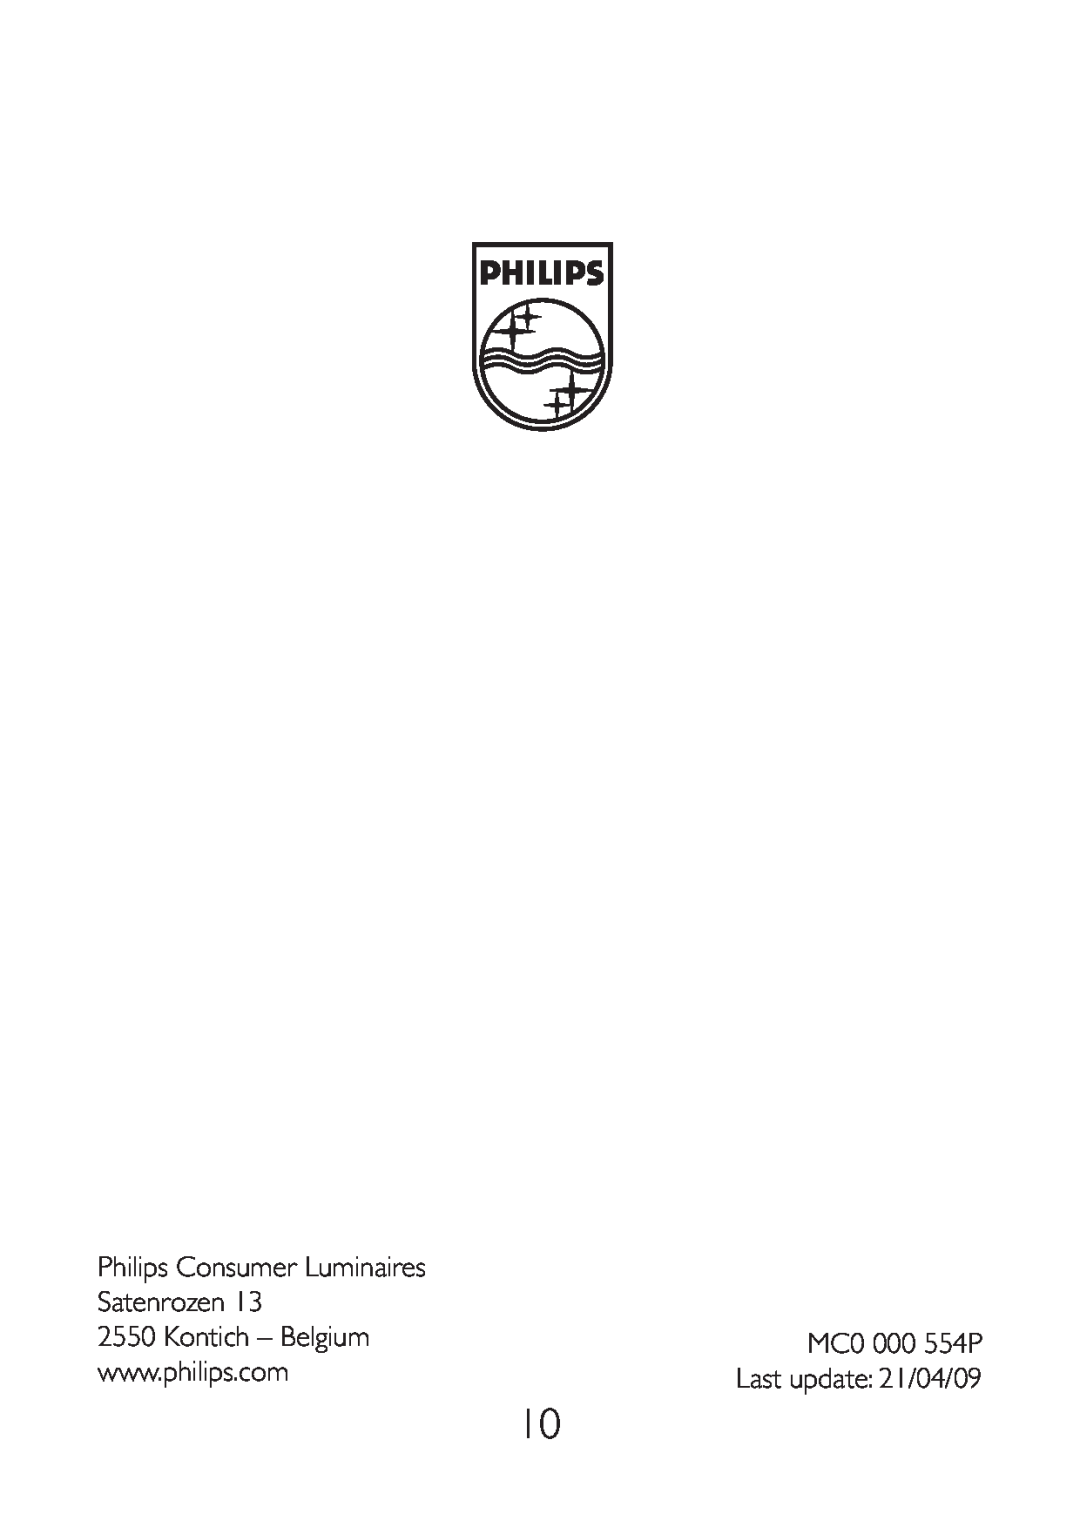 Philips 33205 user manual Philips Consumer Luminaires, Satenrozen, Kontich – Belgium, MC0 000 554P 